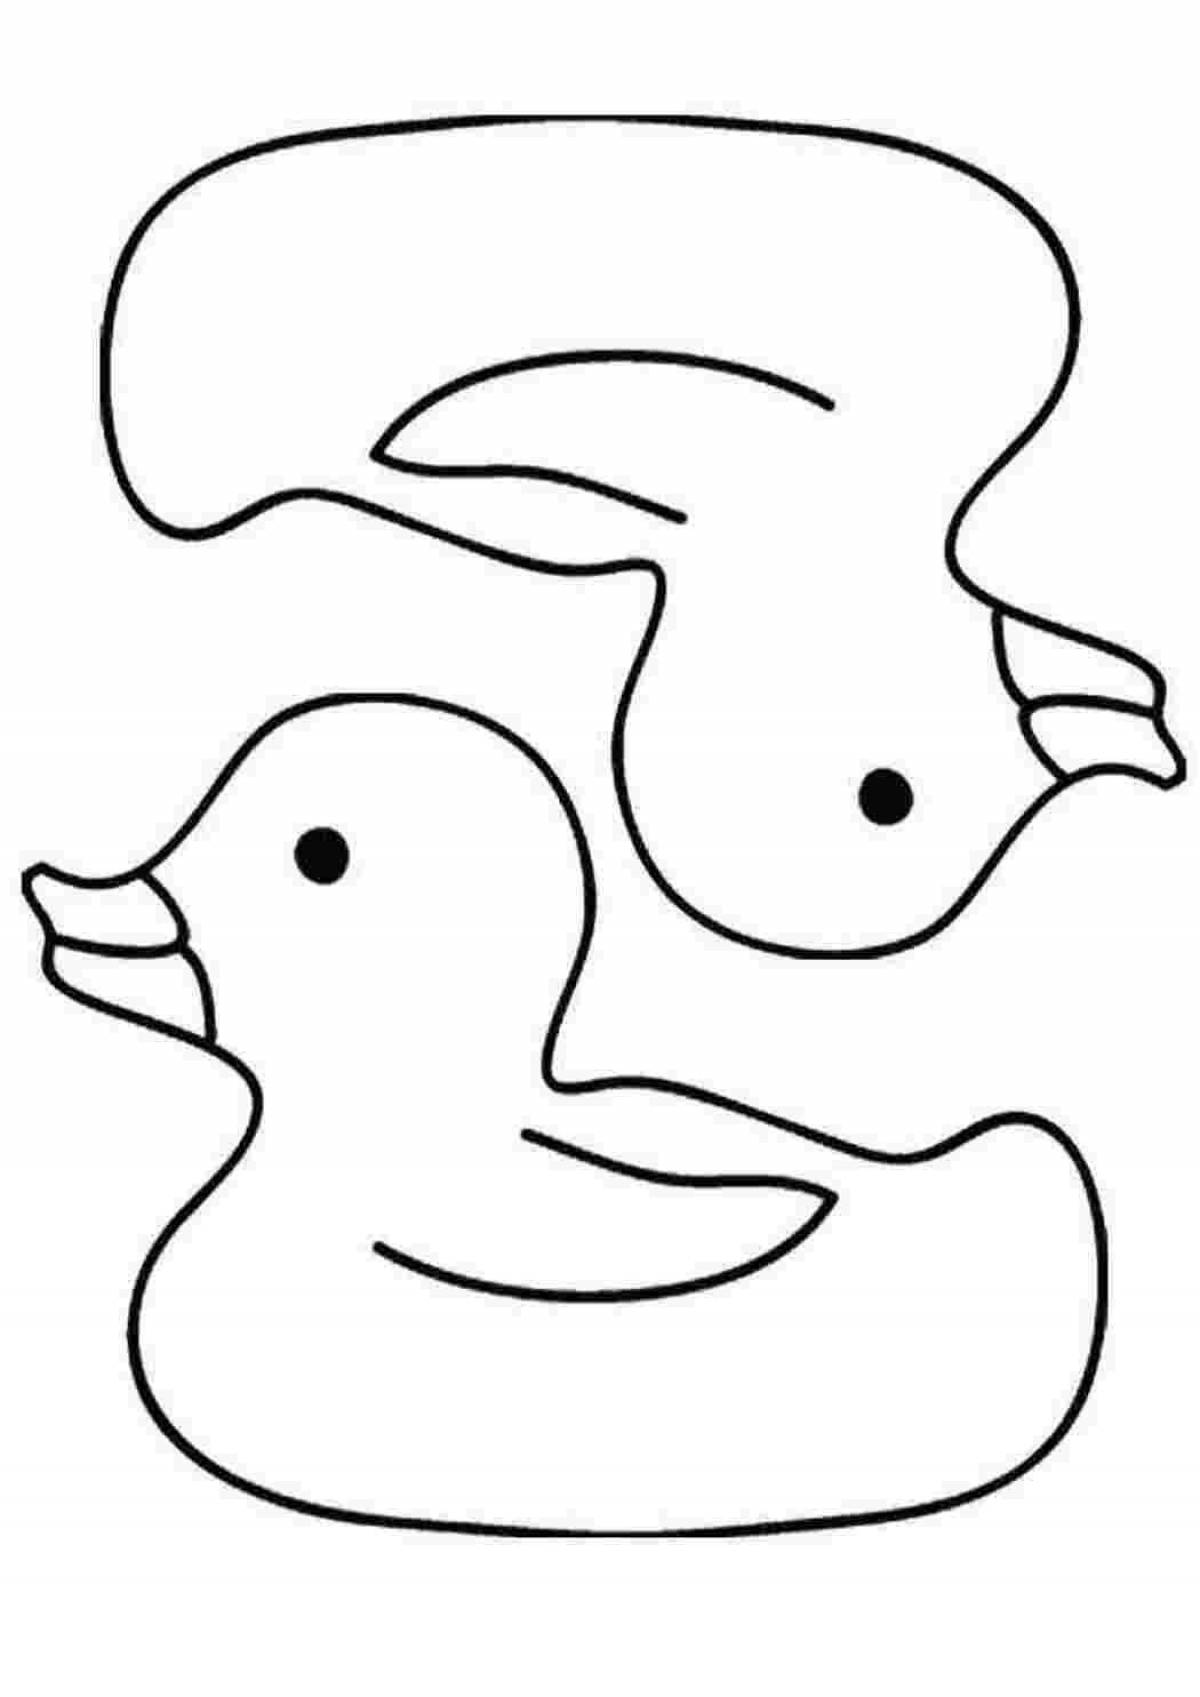 Decorating the Dymkovo duck #3